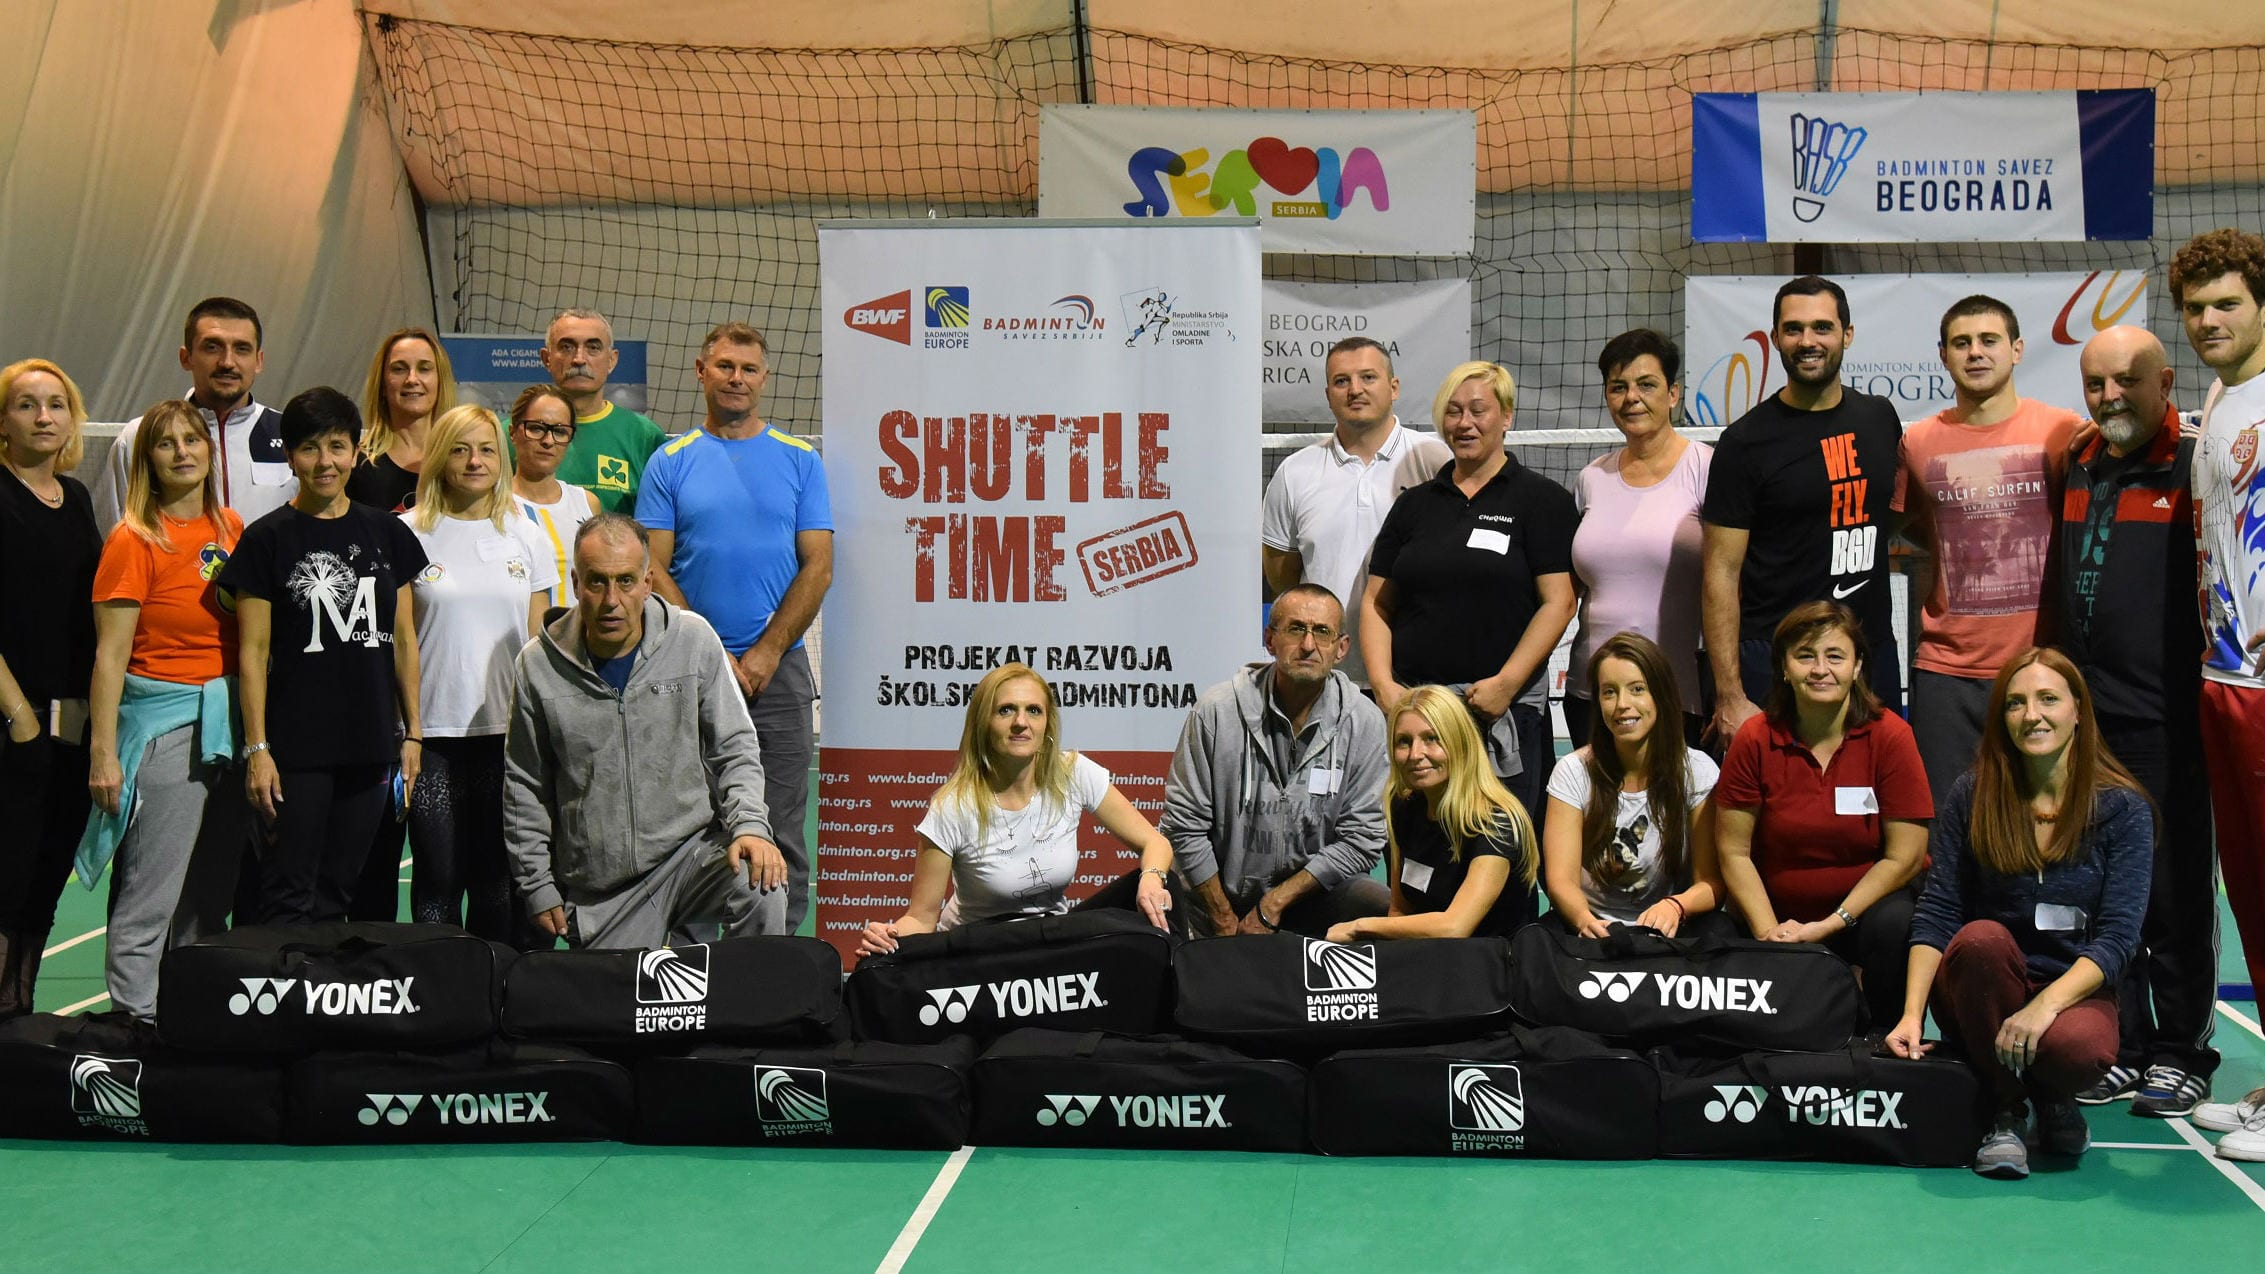 Održan kurs za nastavnike o badmintonu "Shuttle Time" 1